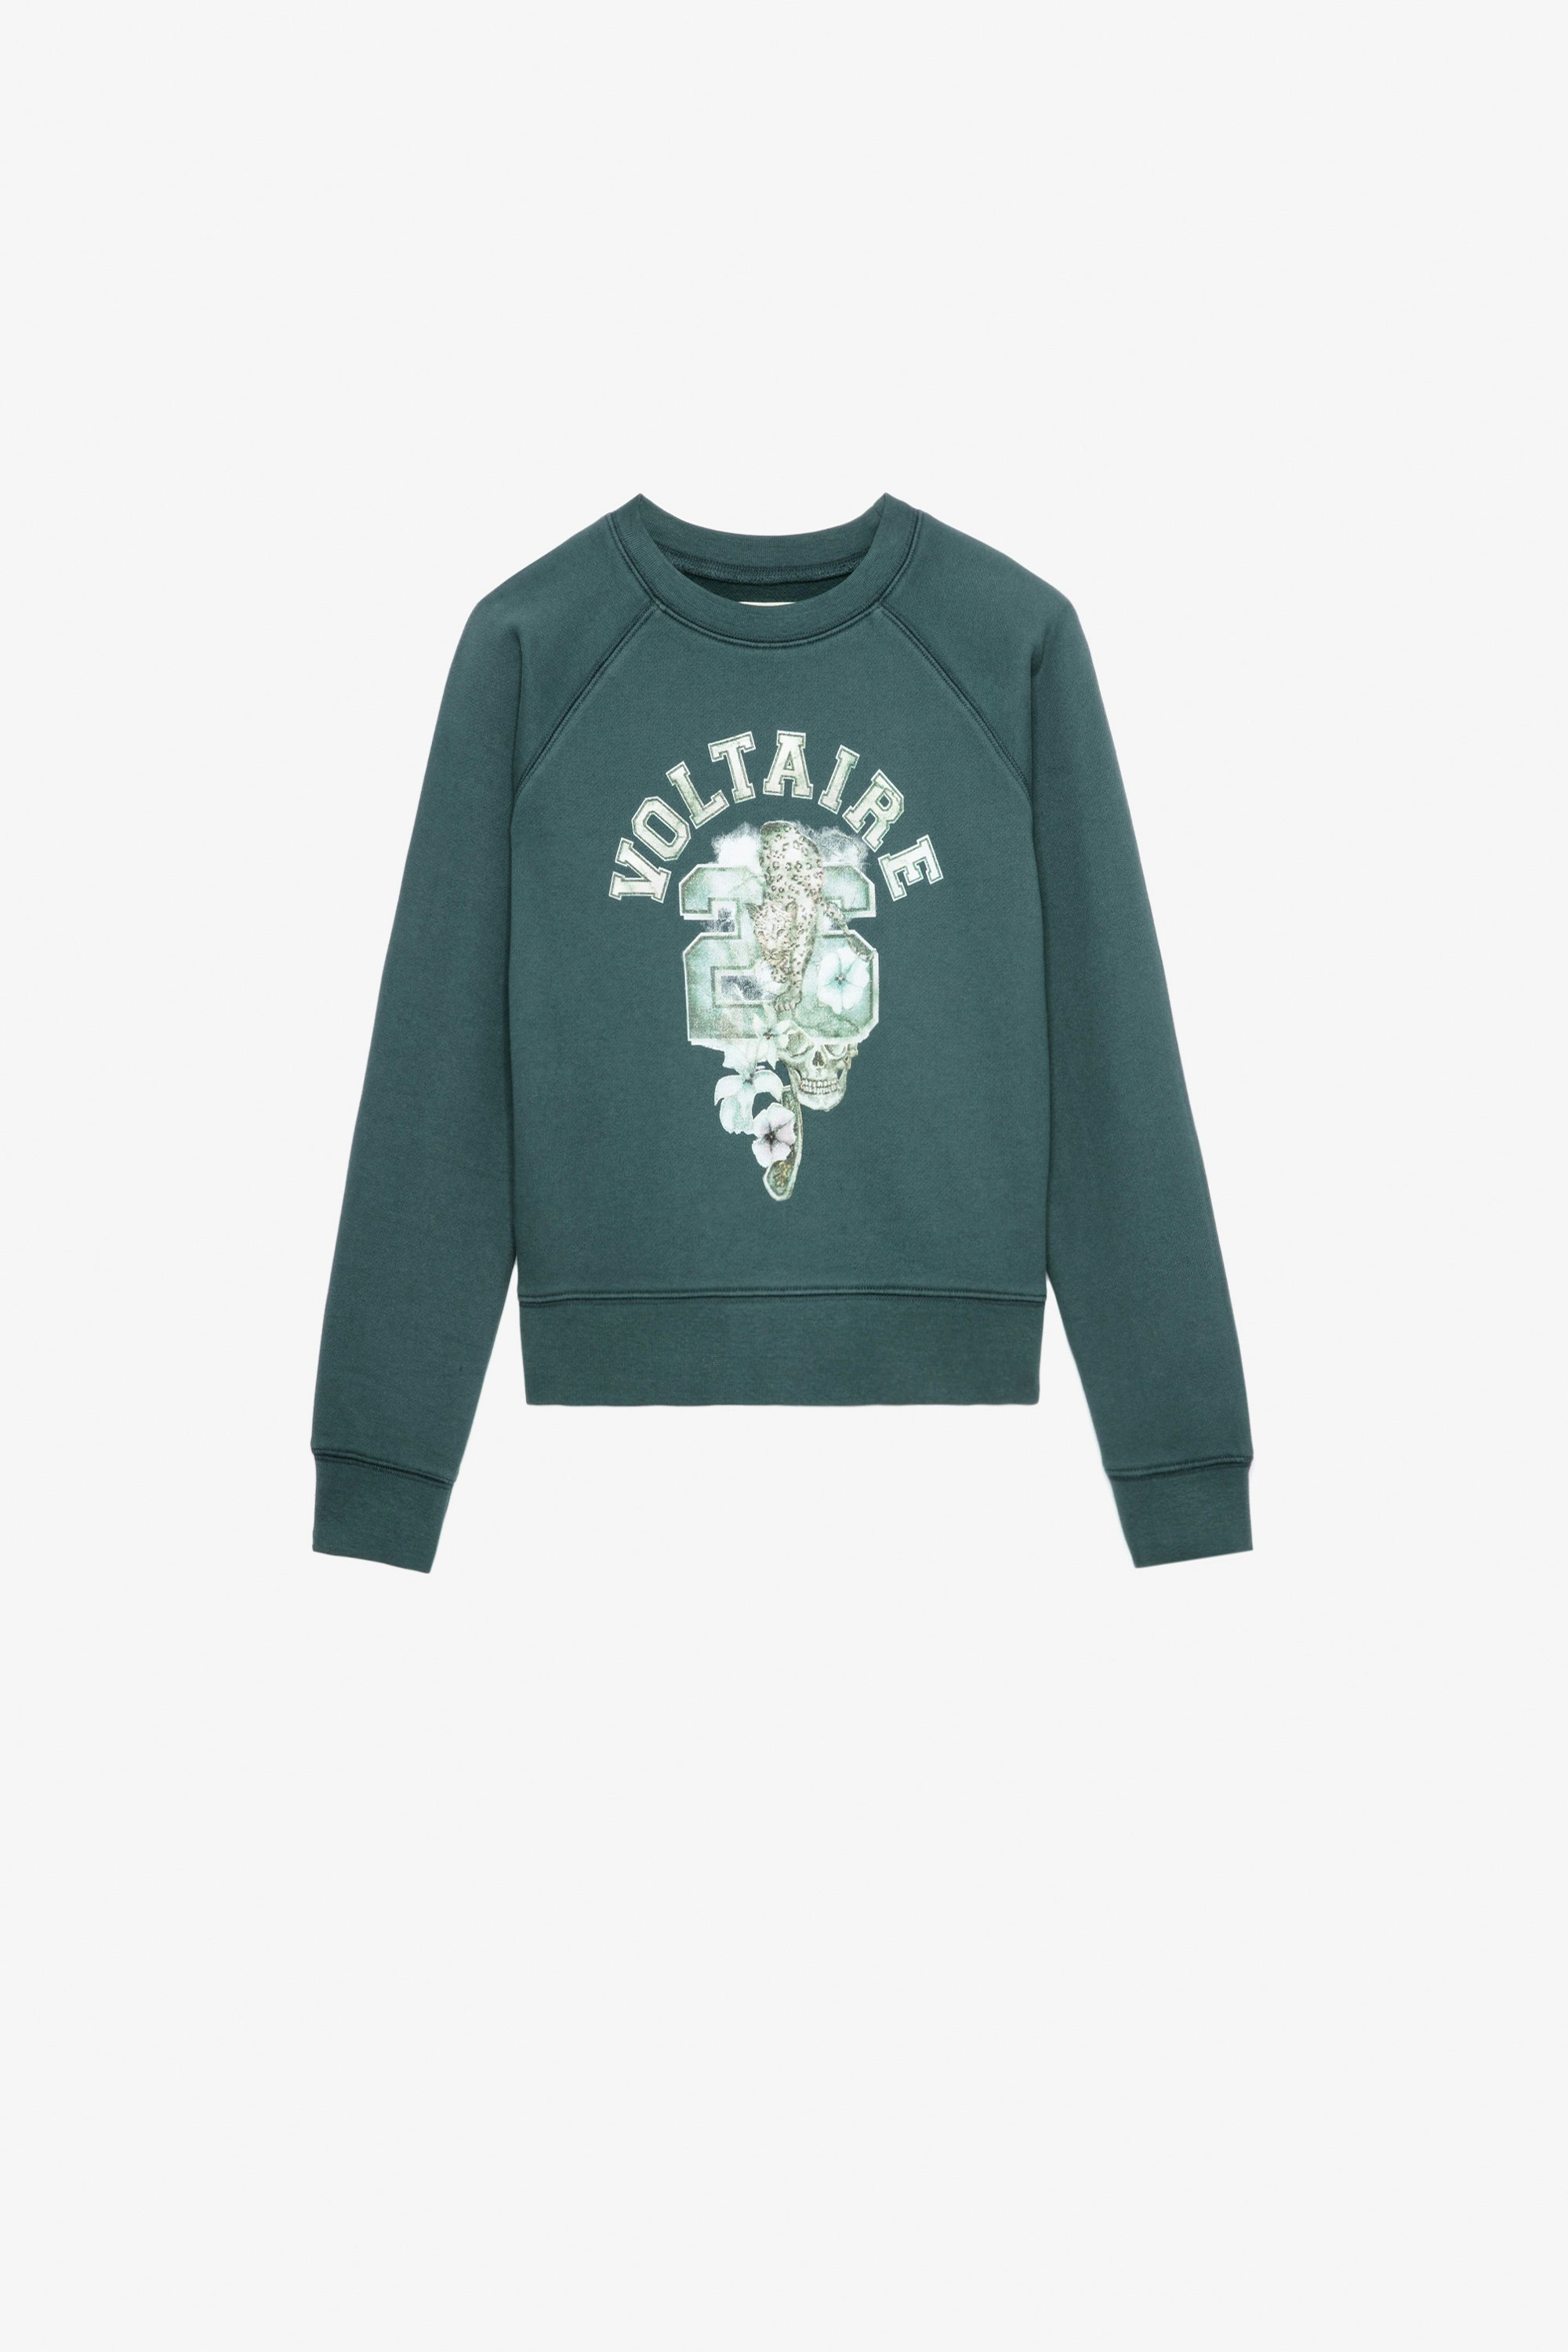 Upper Girls’ Sweatshirt Girls’ green cotton fleece sweatshirt with Voltaire illustration.